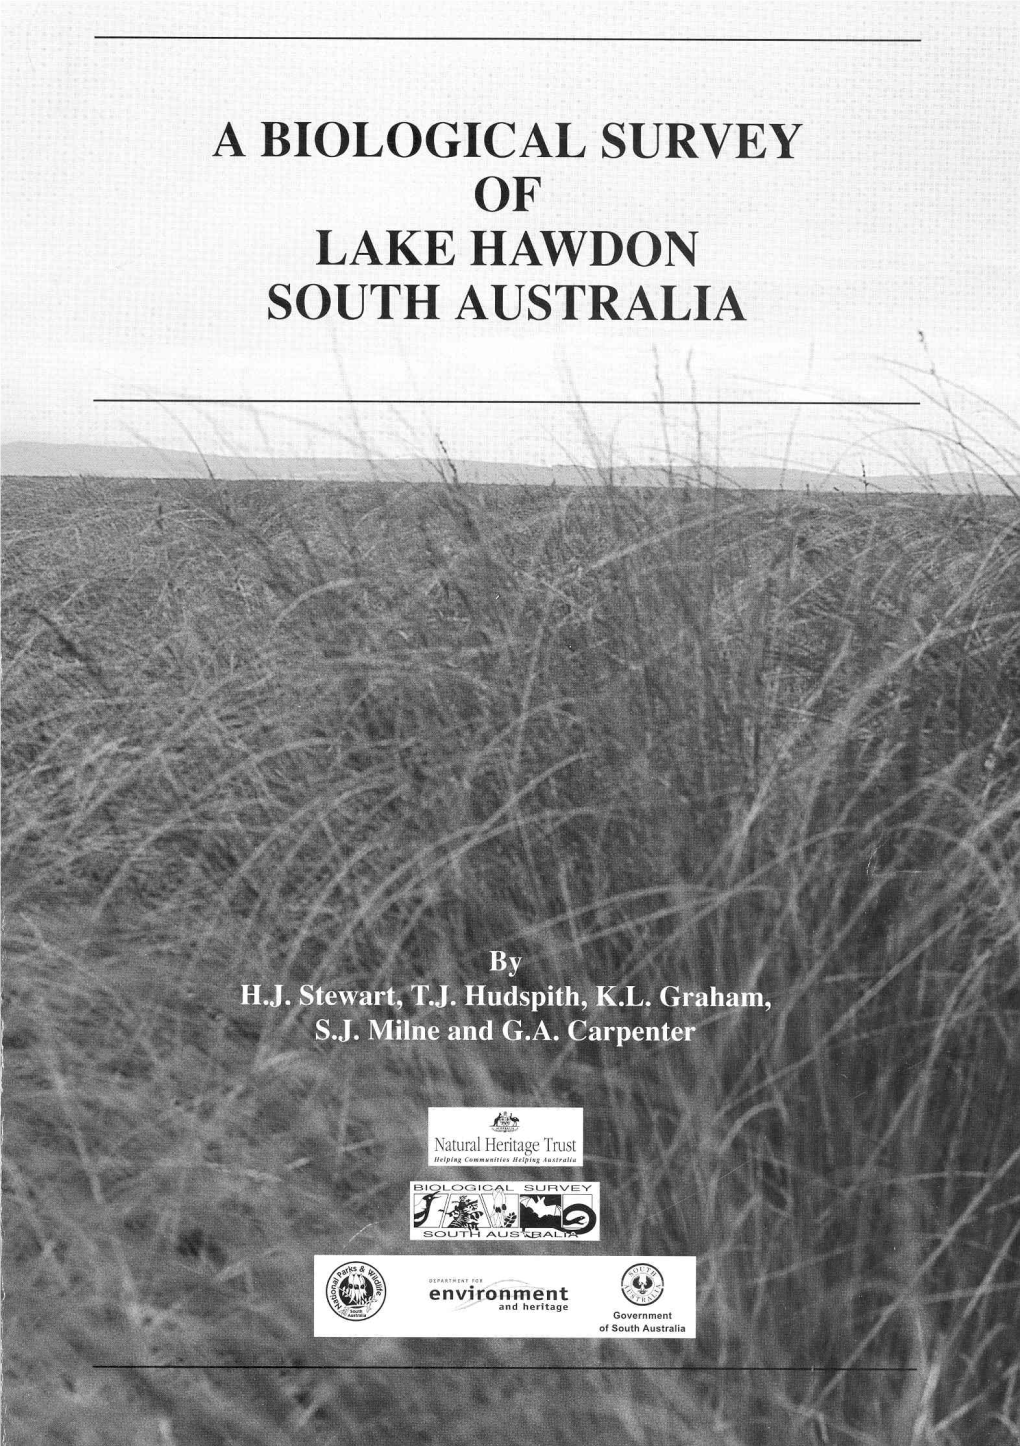 A Biological Survey of Lake Hawdon South Australia in January 2000